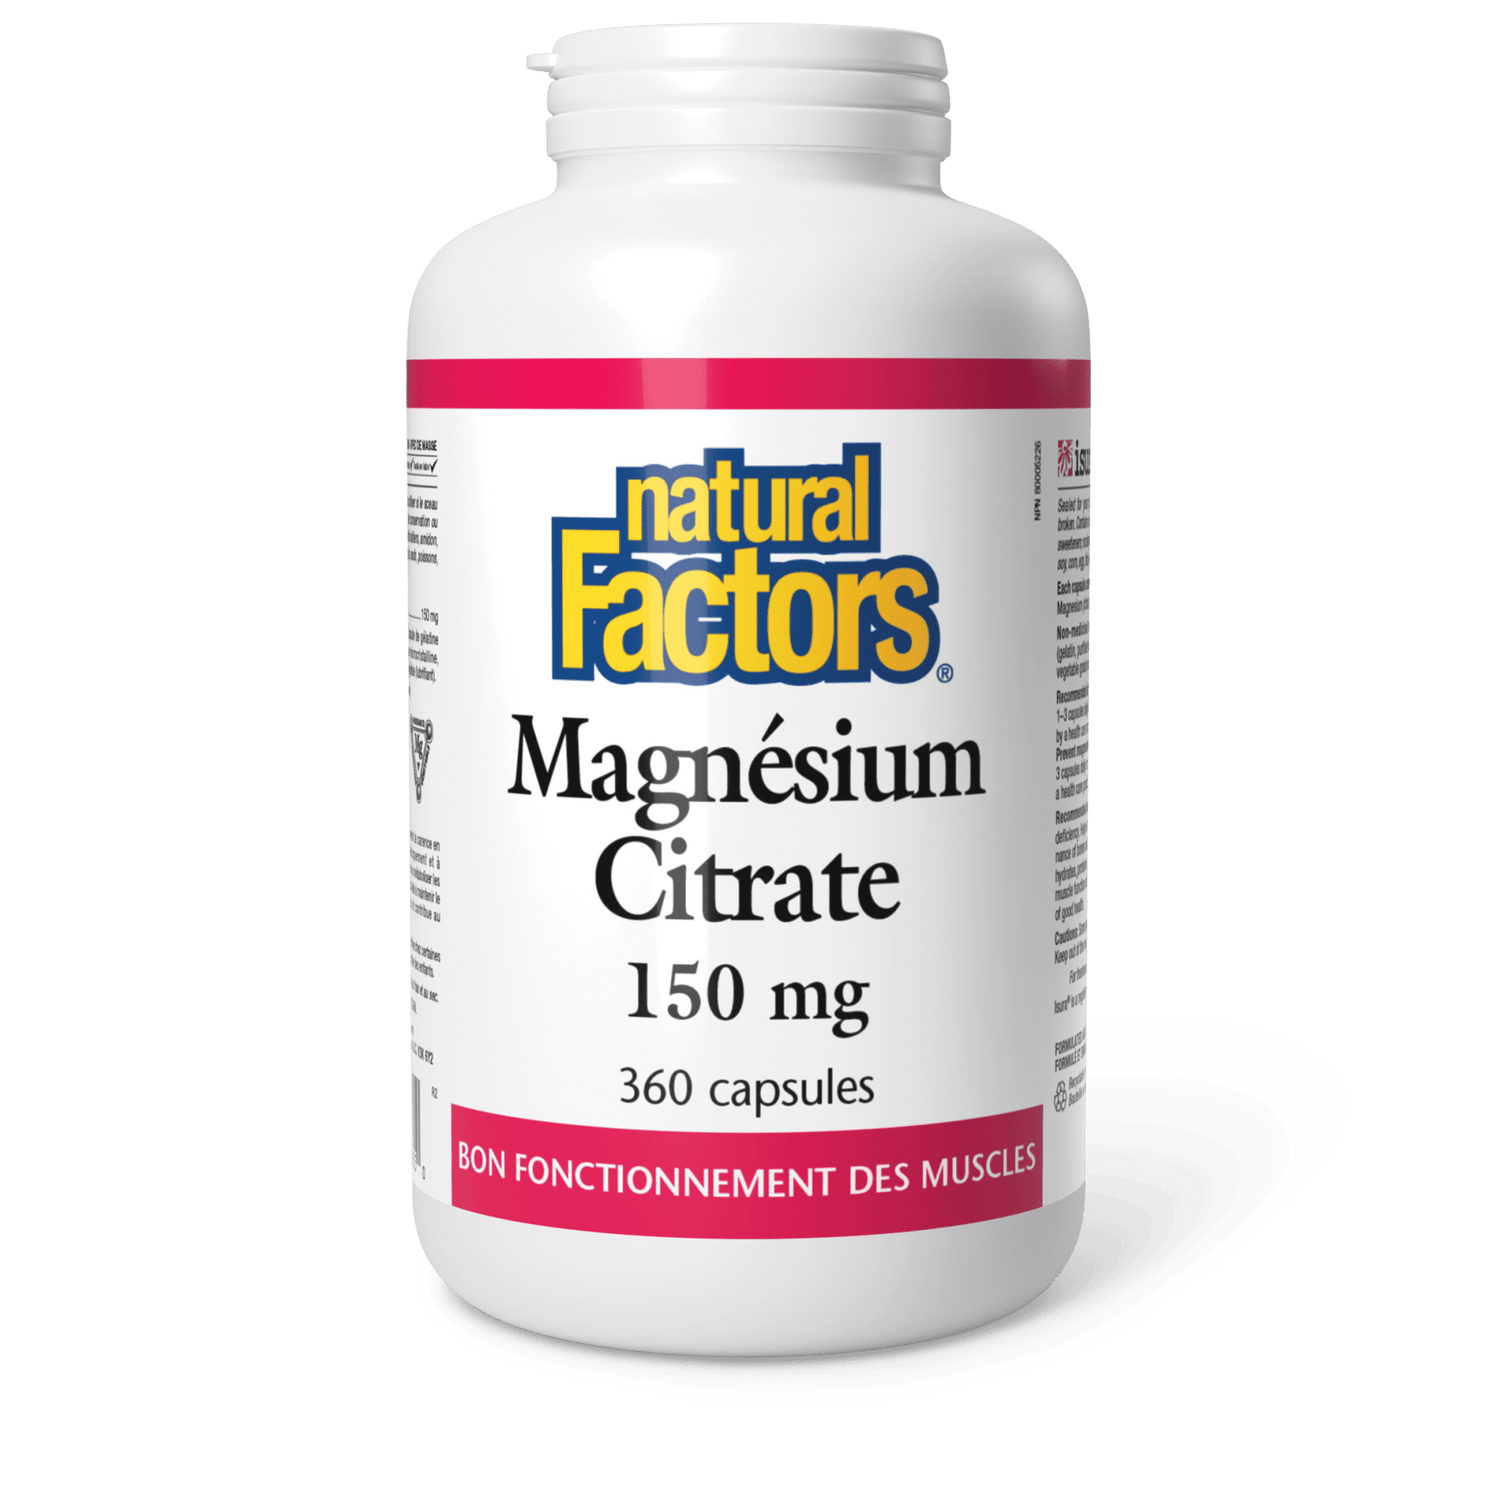 Magnésium Citrate 150 mg, Natural Factors|v|image|1655